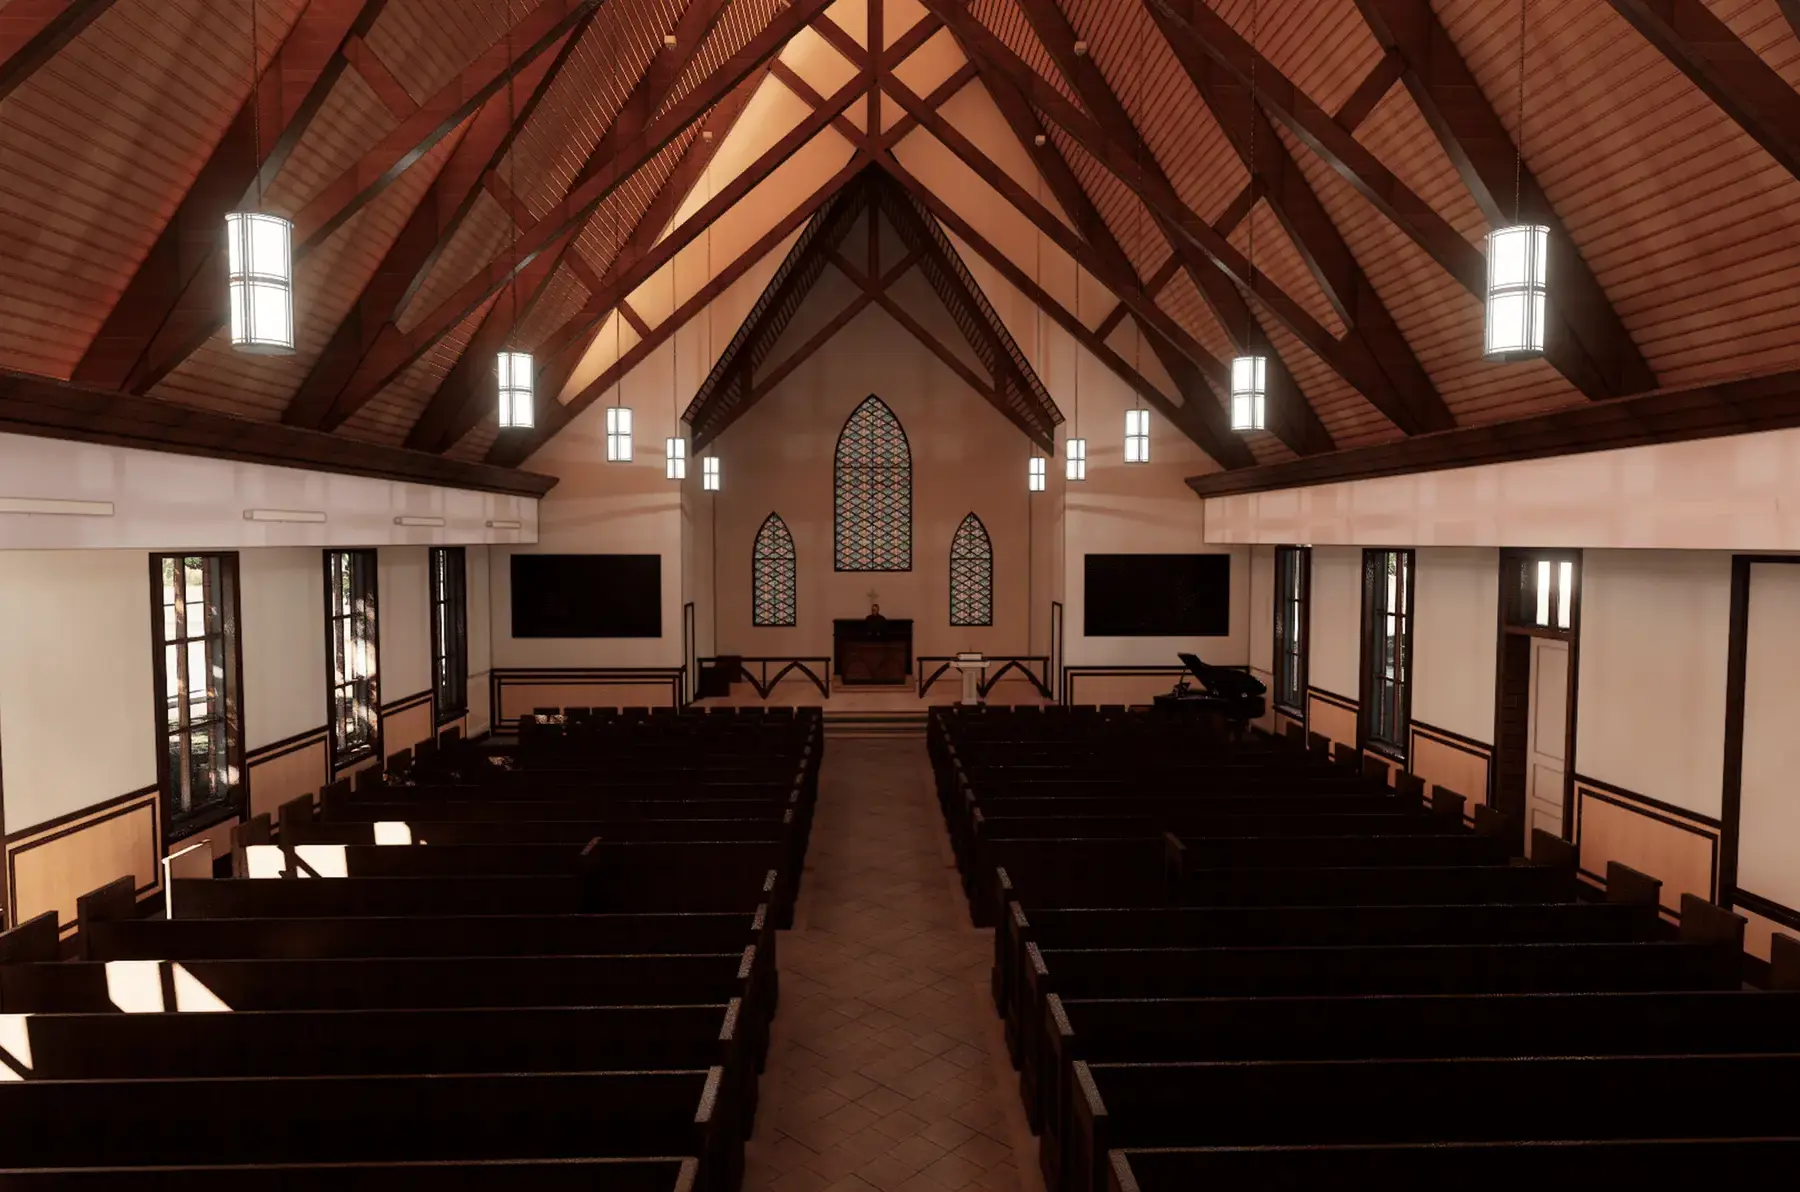 New Chapel interior, architectural image